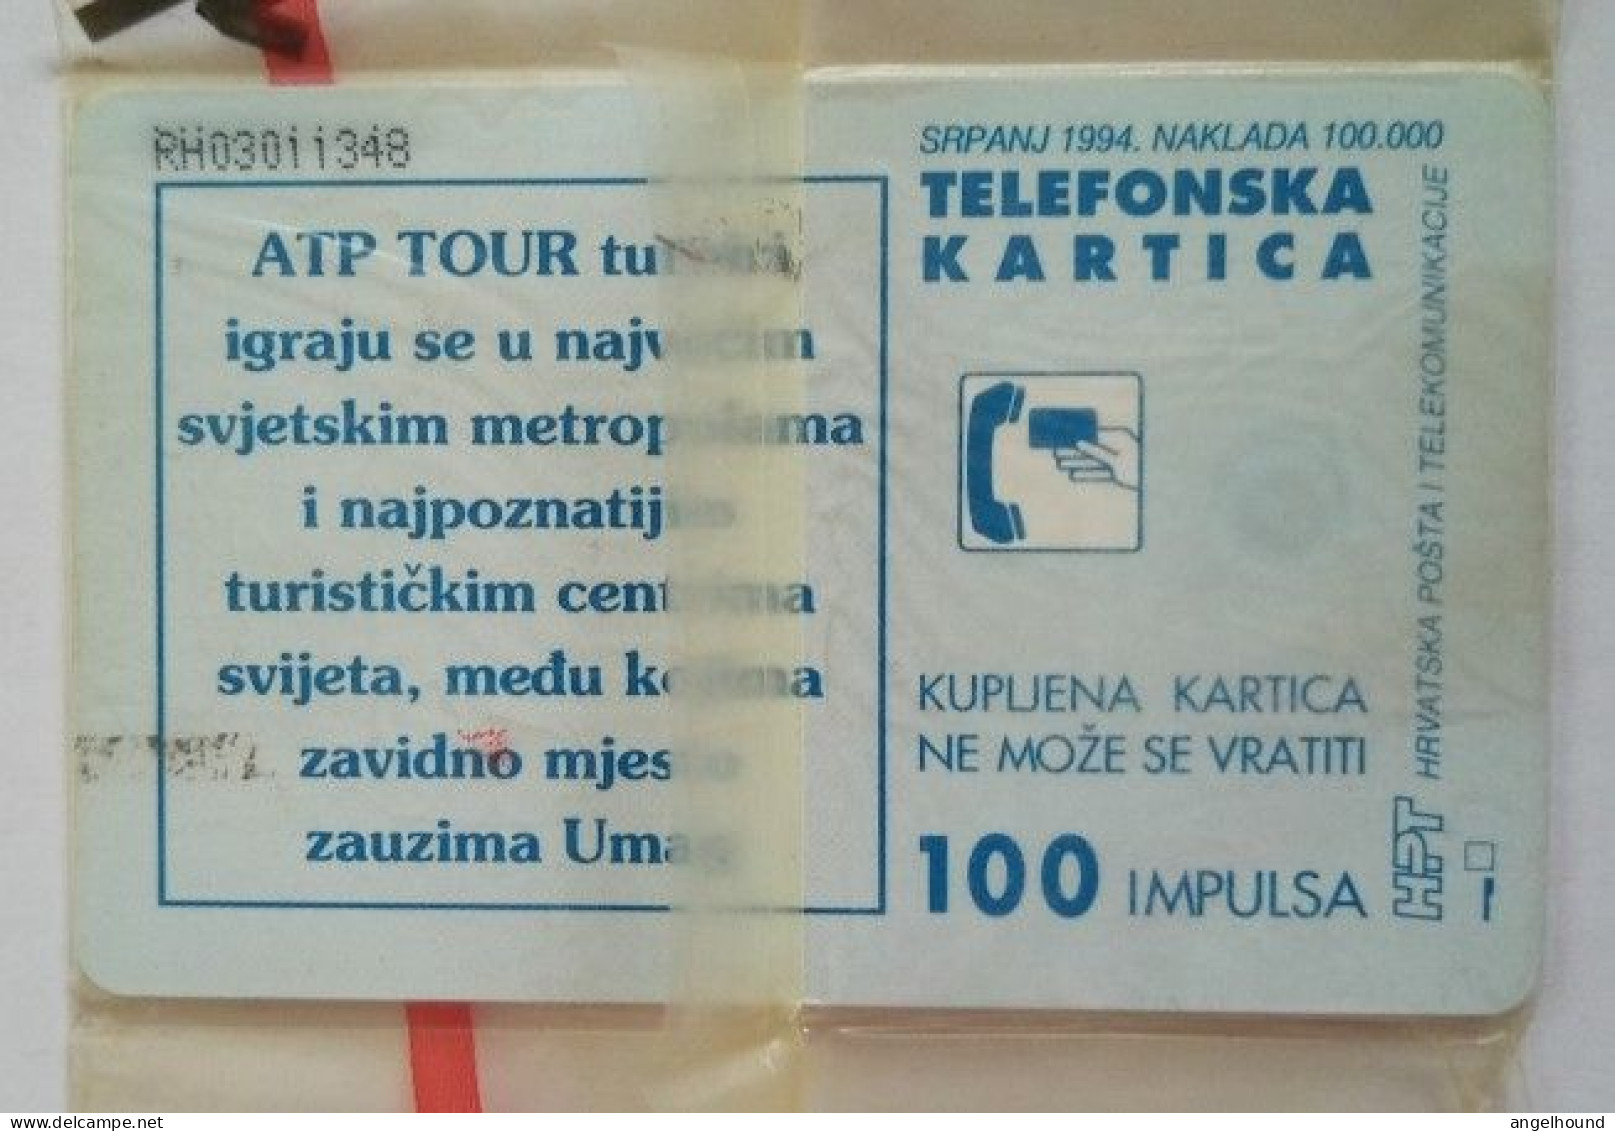 Croatia 100 Units MINT Chip Card - ATP Umag ' 94 - Croatie